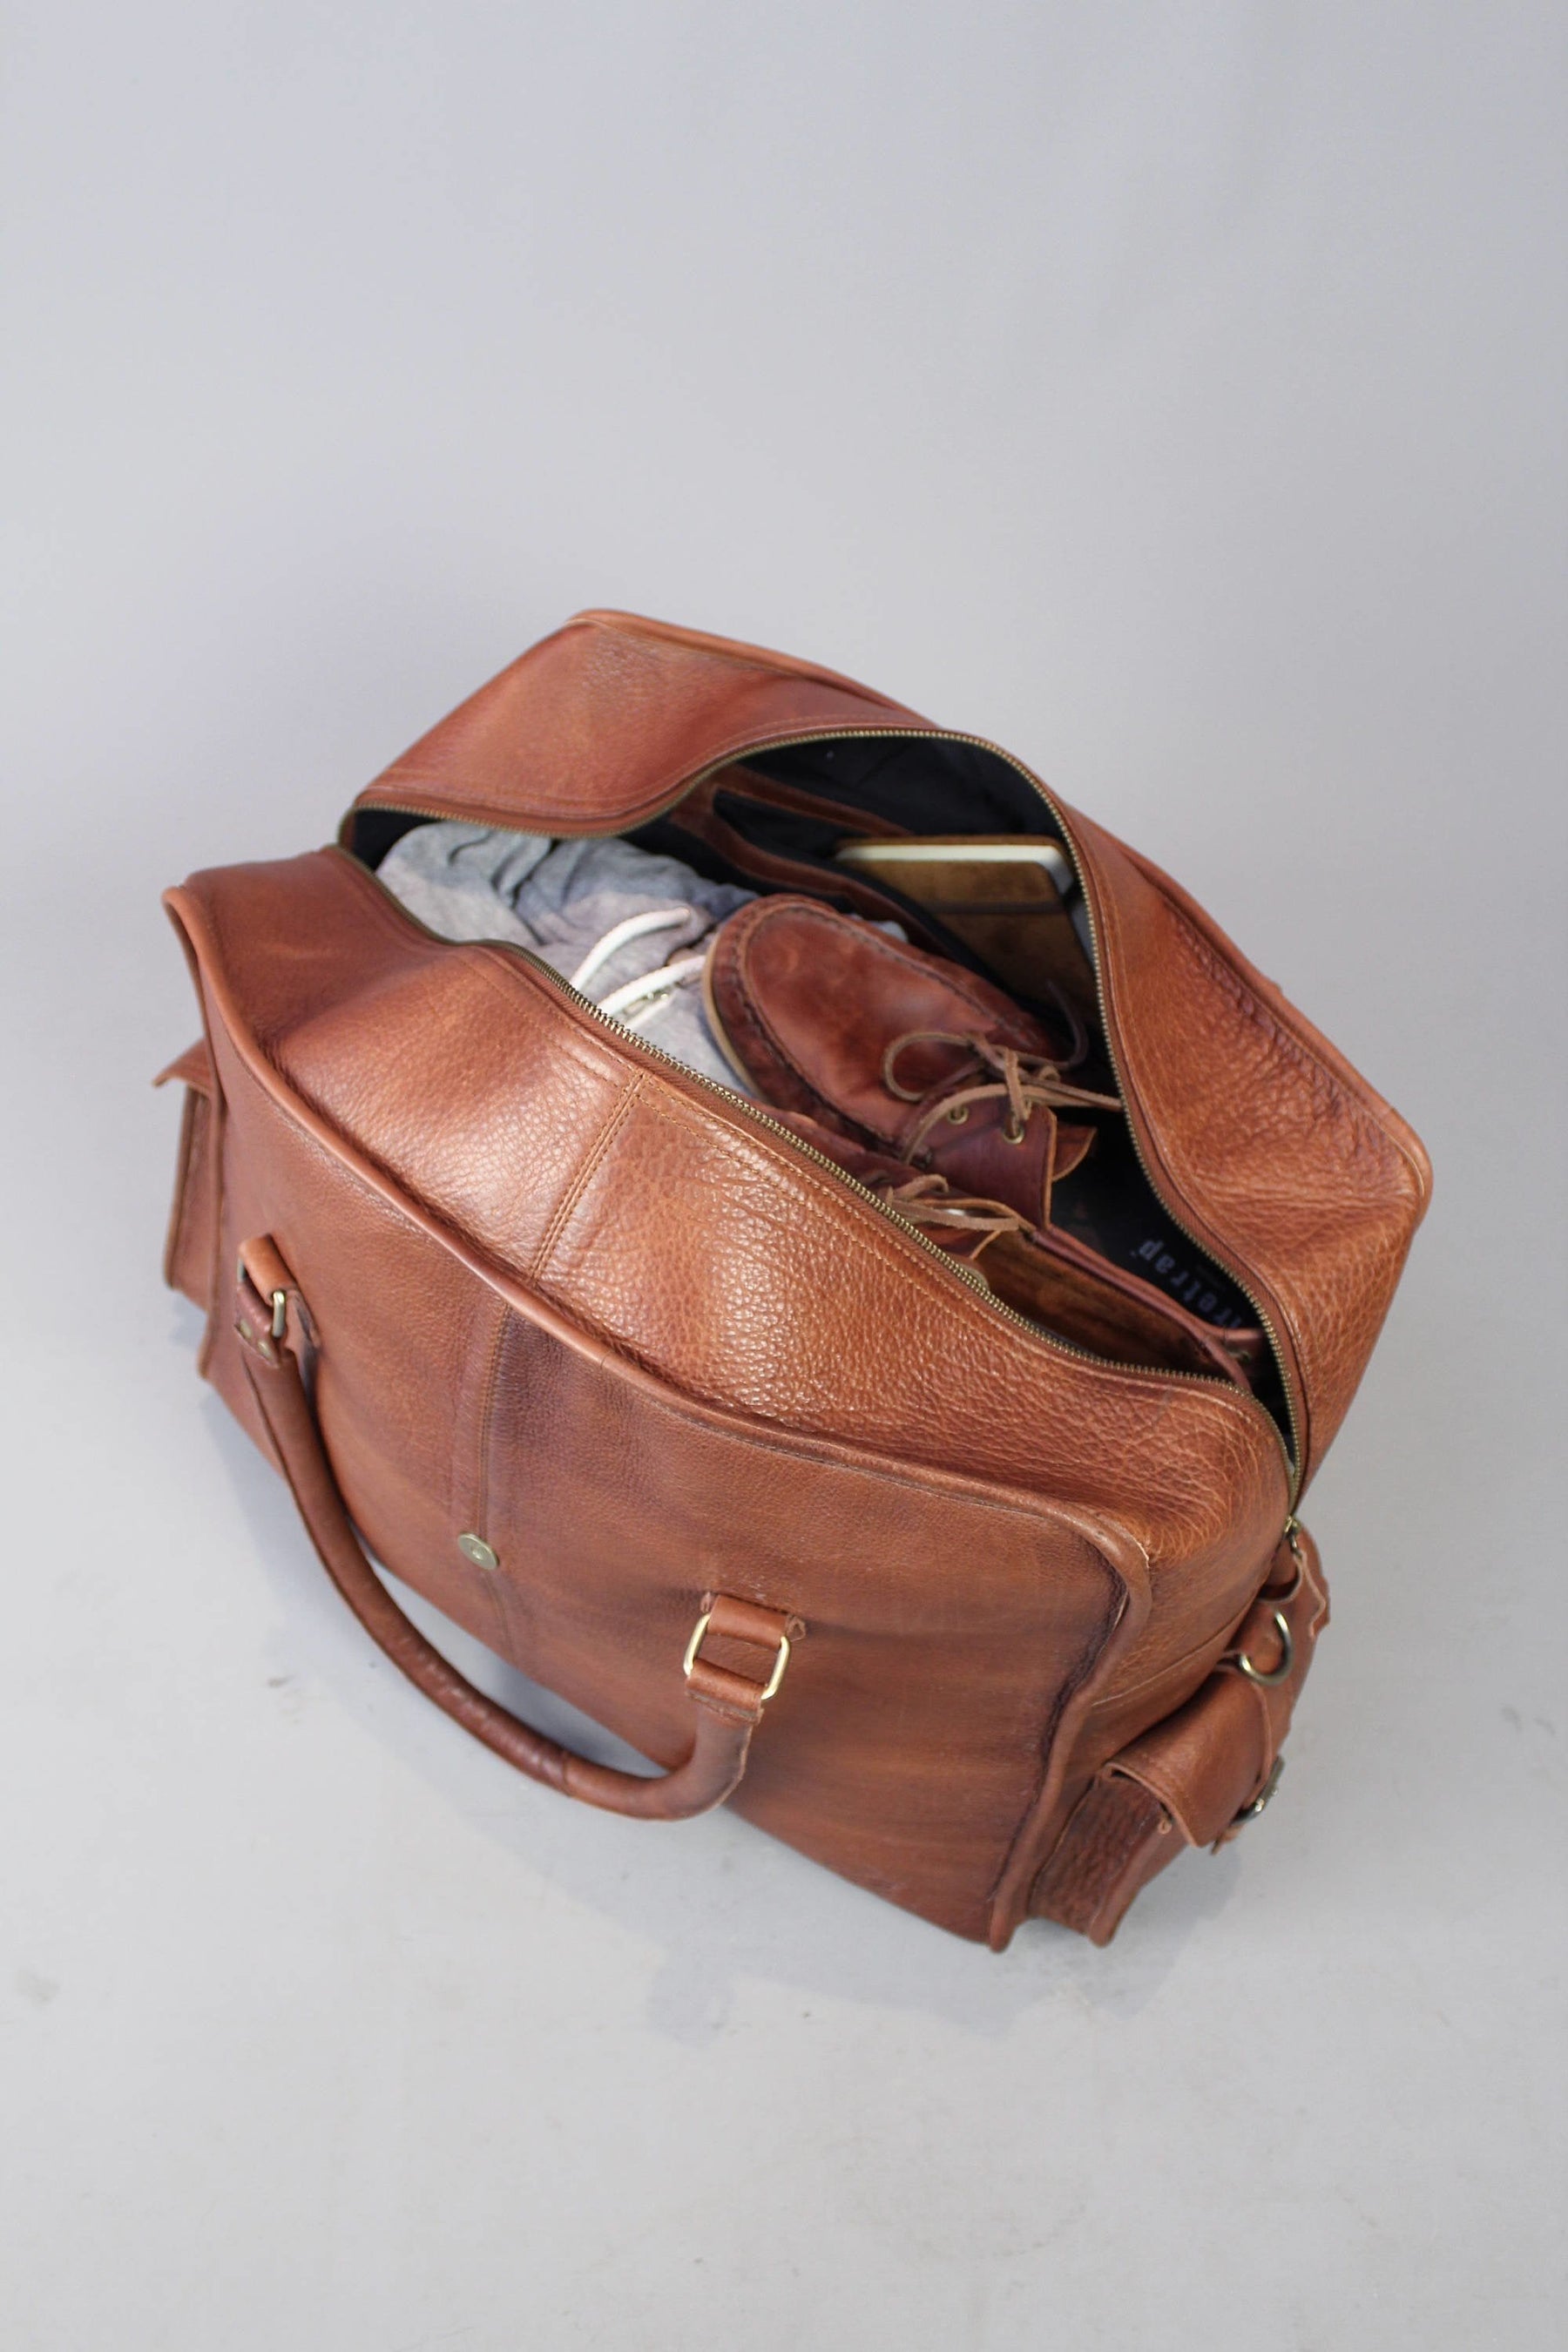 Shriners Travel Bag - Genuine Brown Leather - Bricks Masons